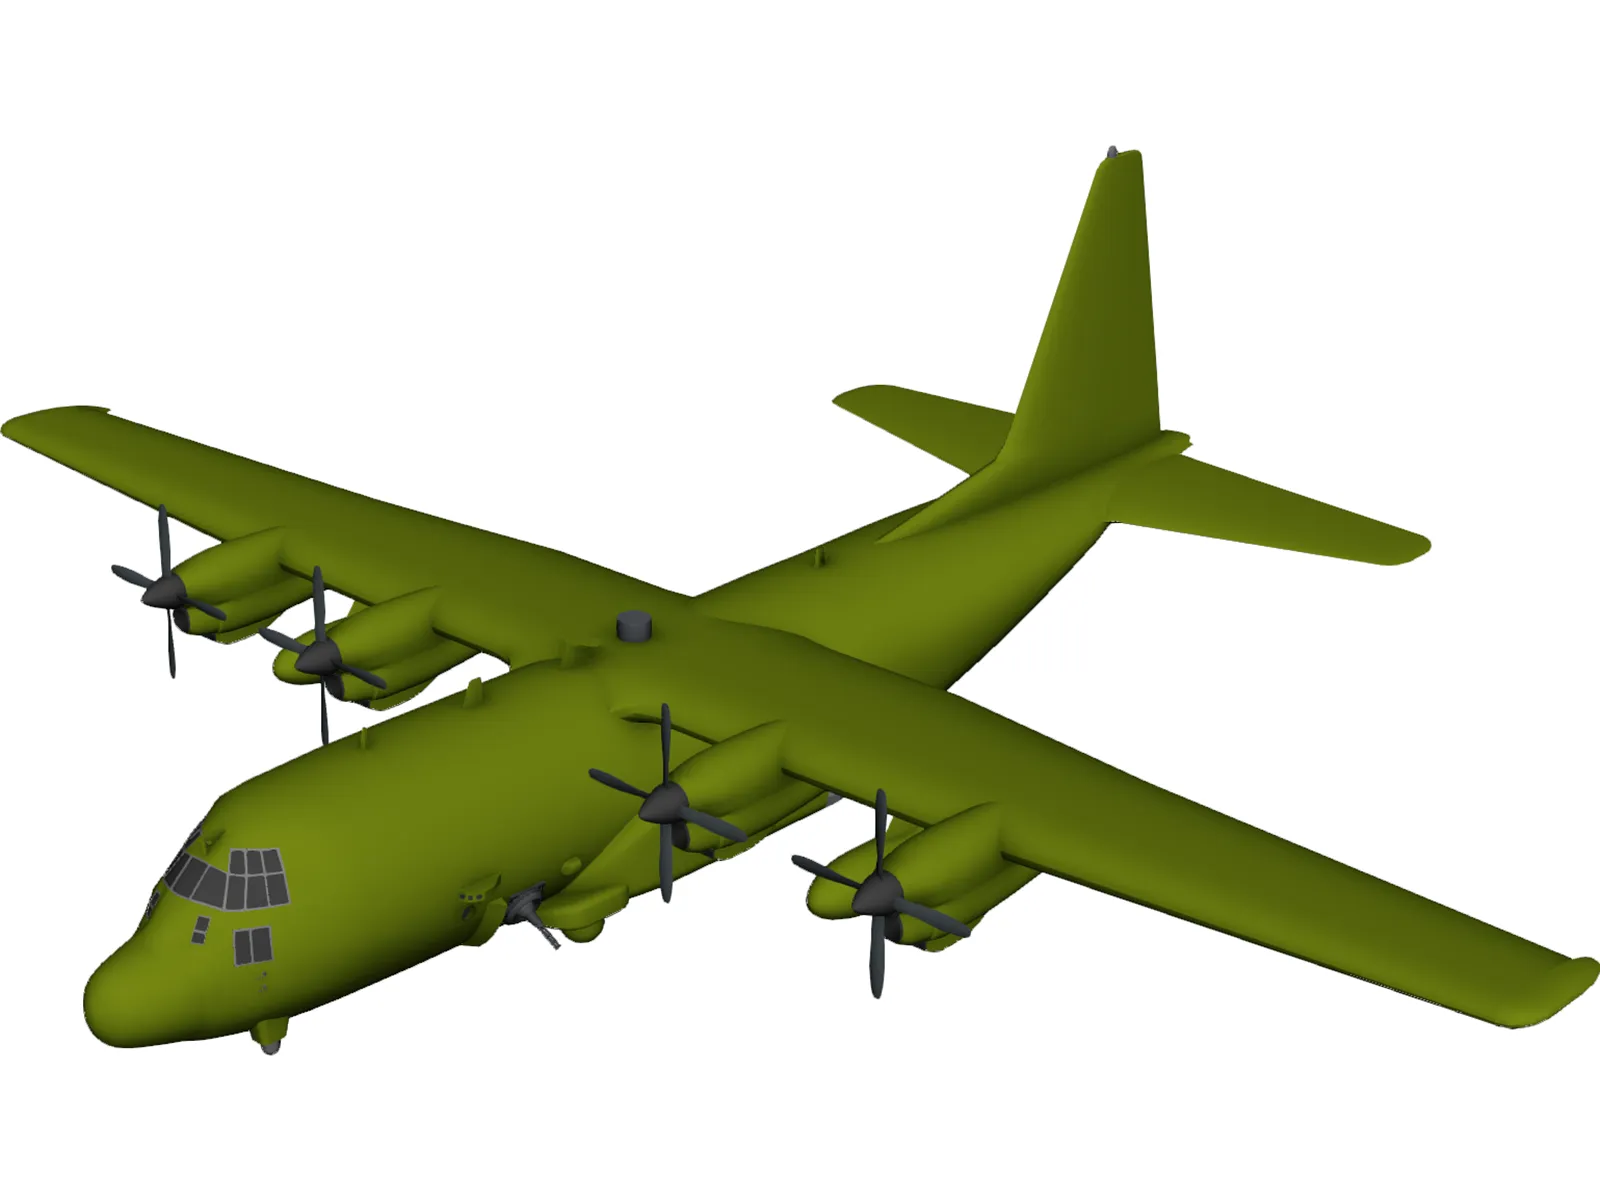 Lockheed AC-130U Gunship 3D Model